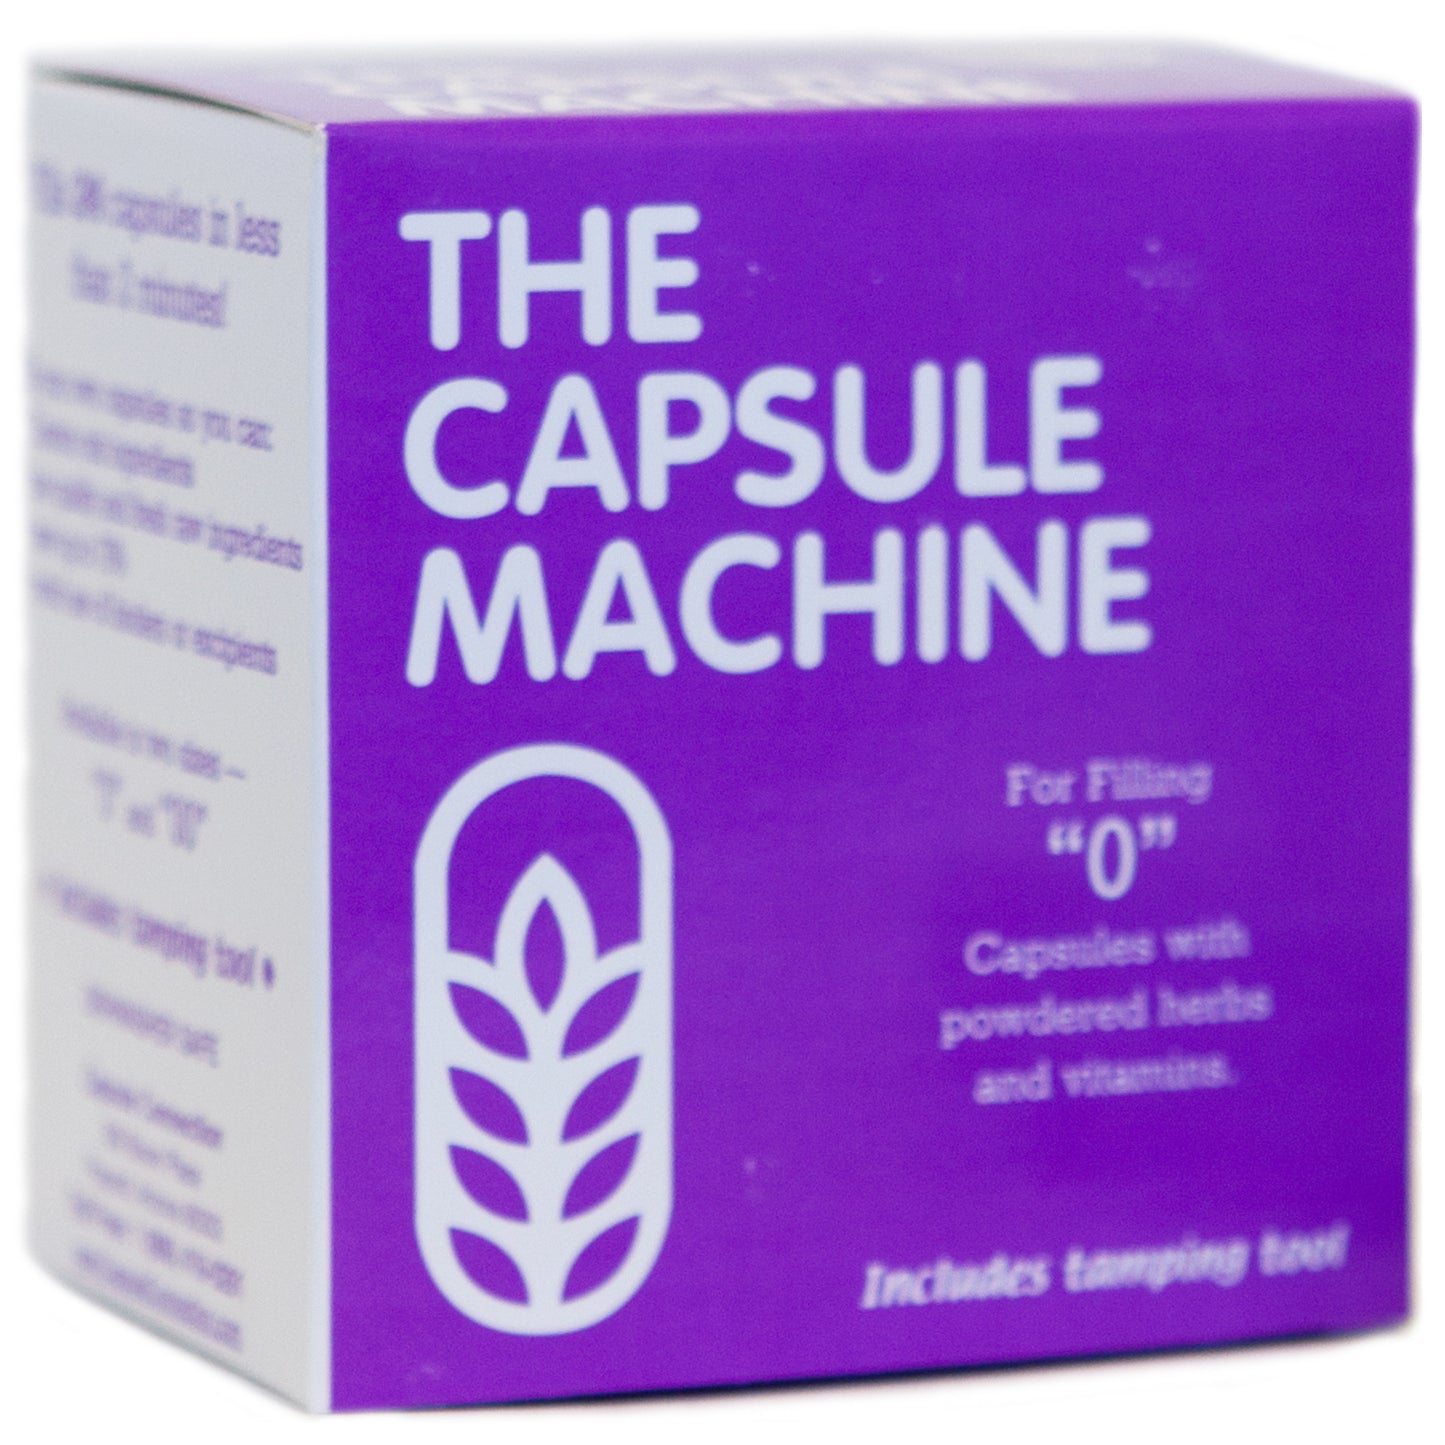 The Capsule Machine Encapsulating Device - For Size "0" Capsules